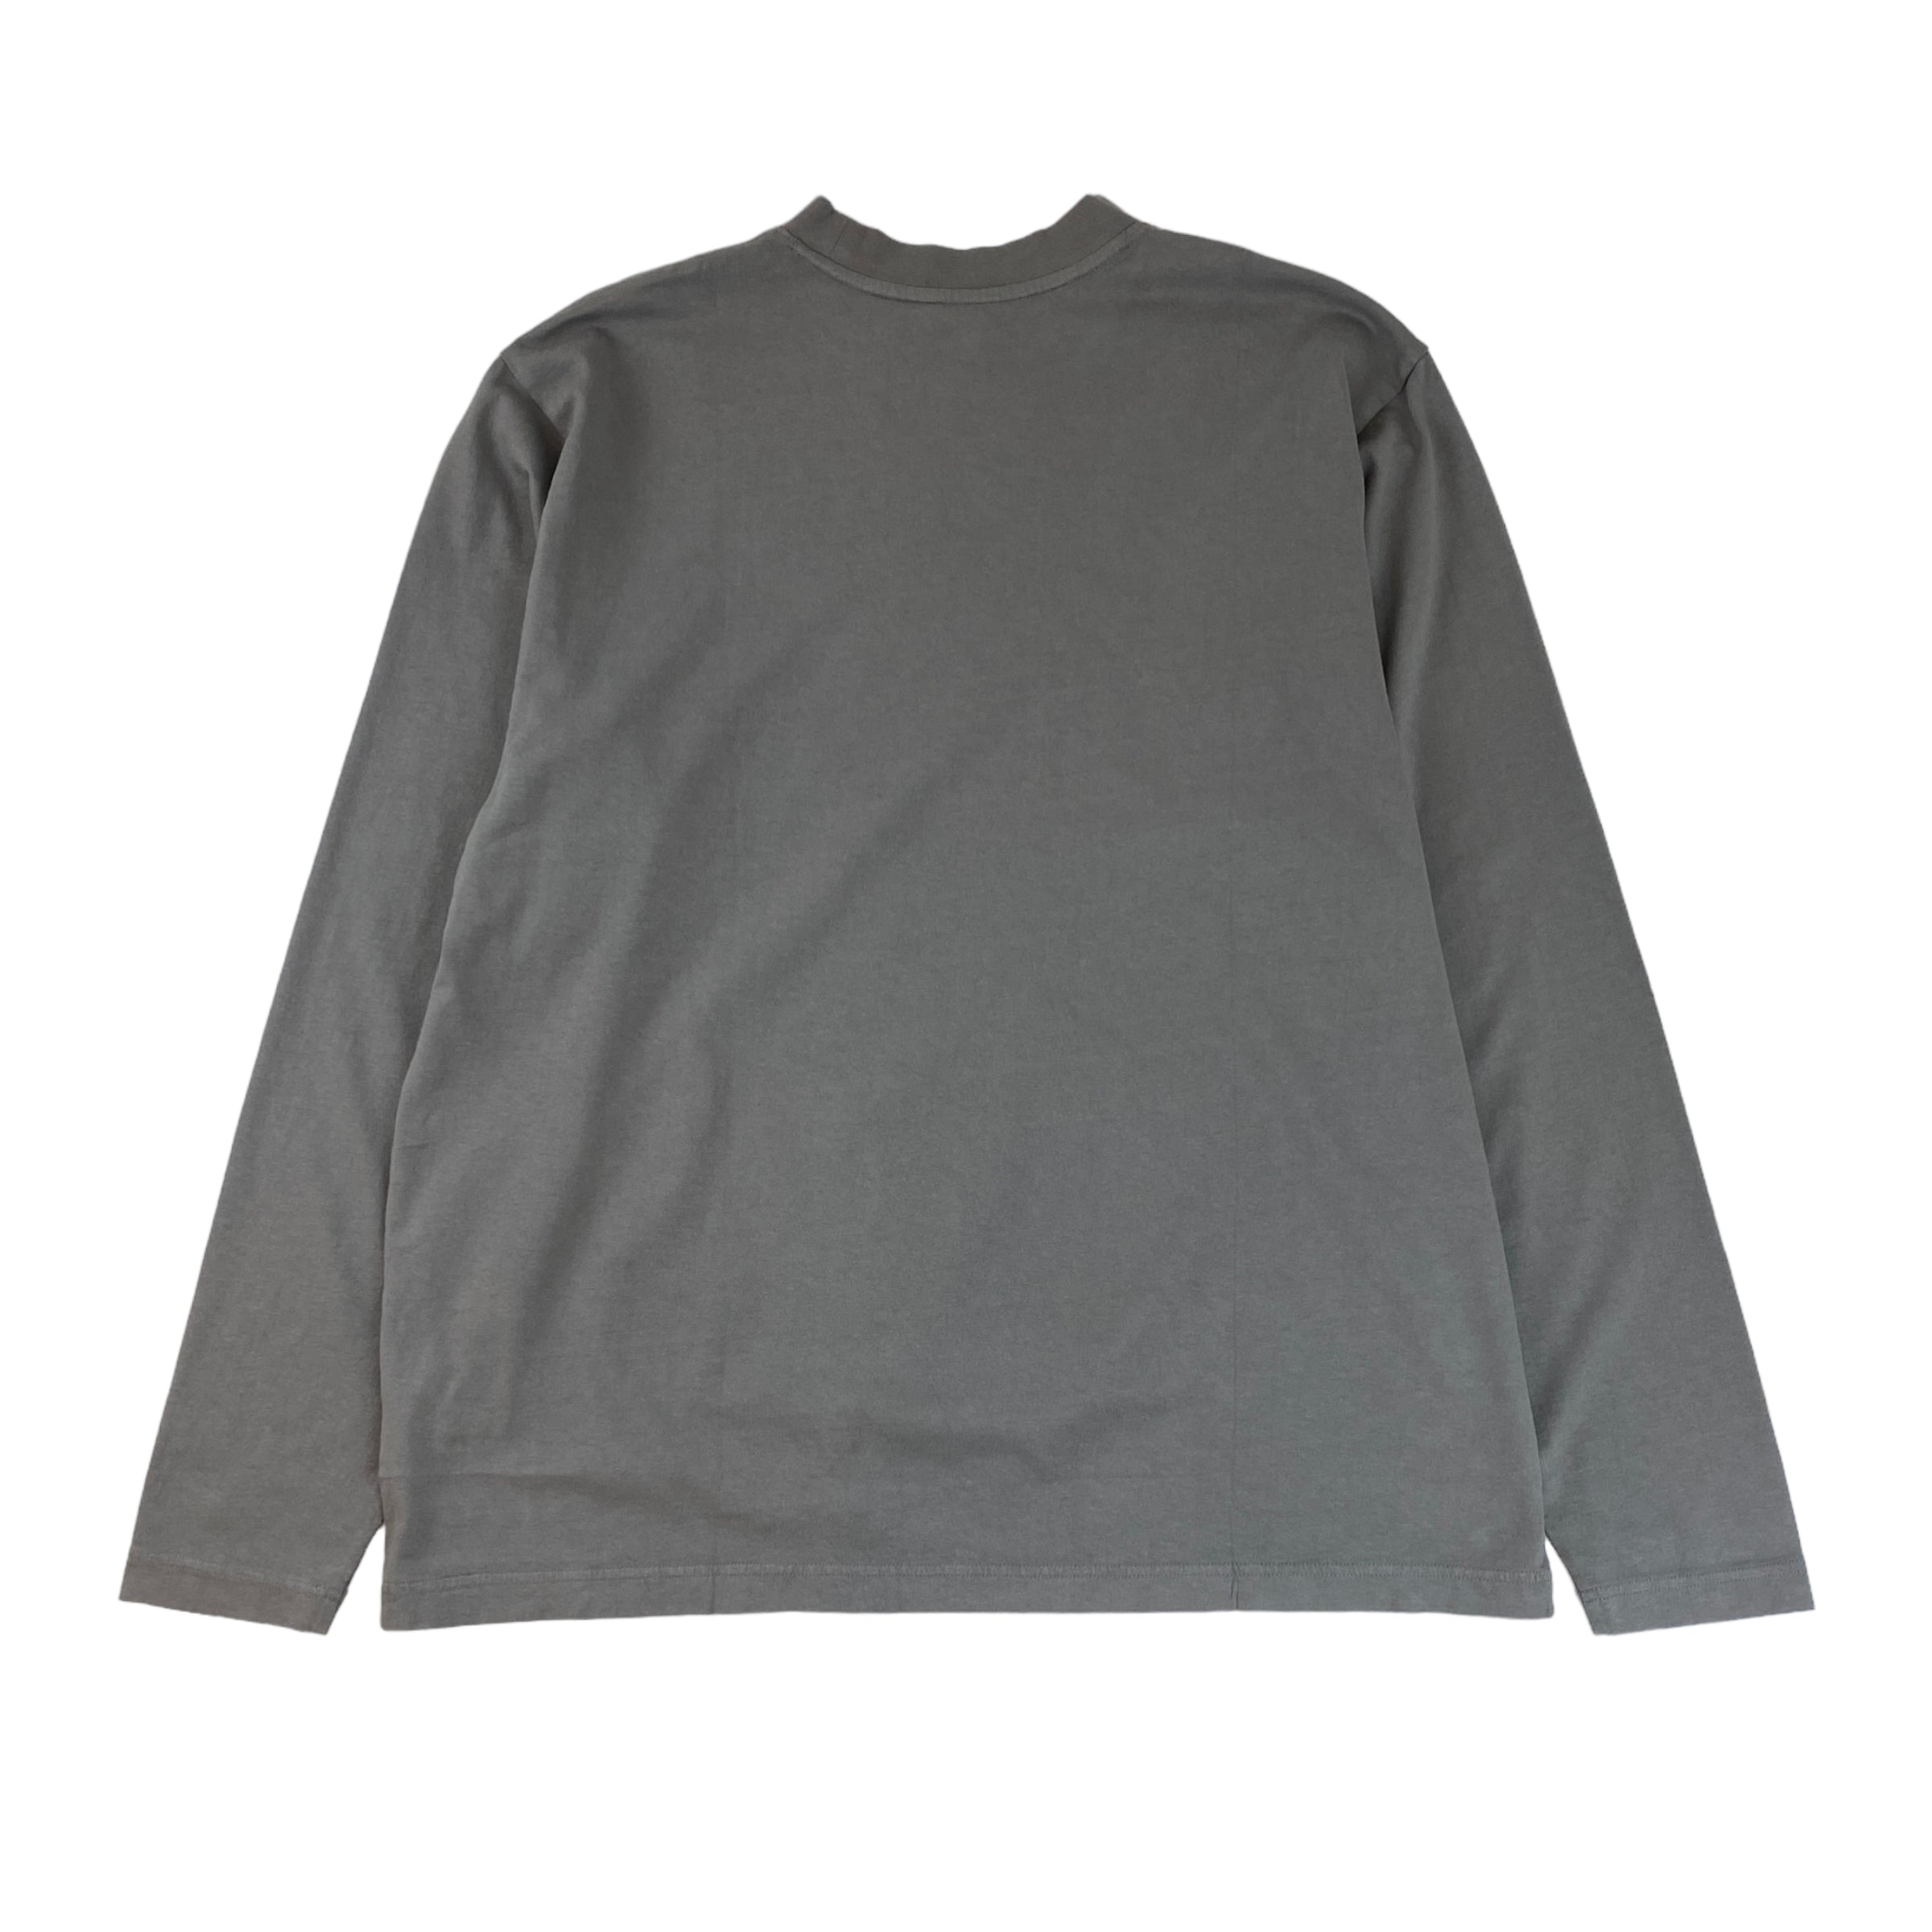 Yeezy x Gap Light Grey Unreleased Longsleeve Shirt - Light Grey Shirt